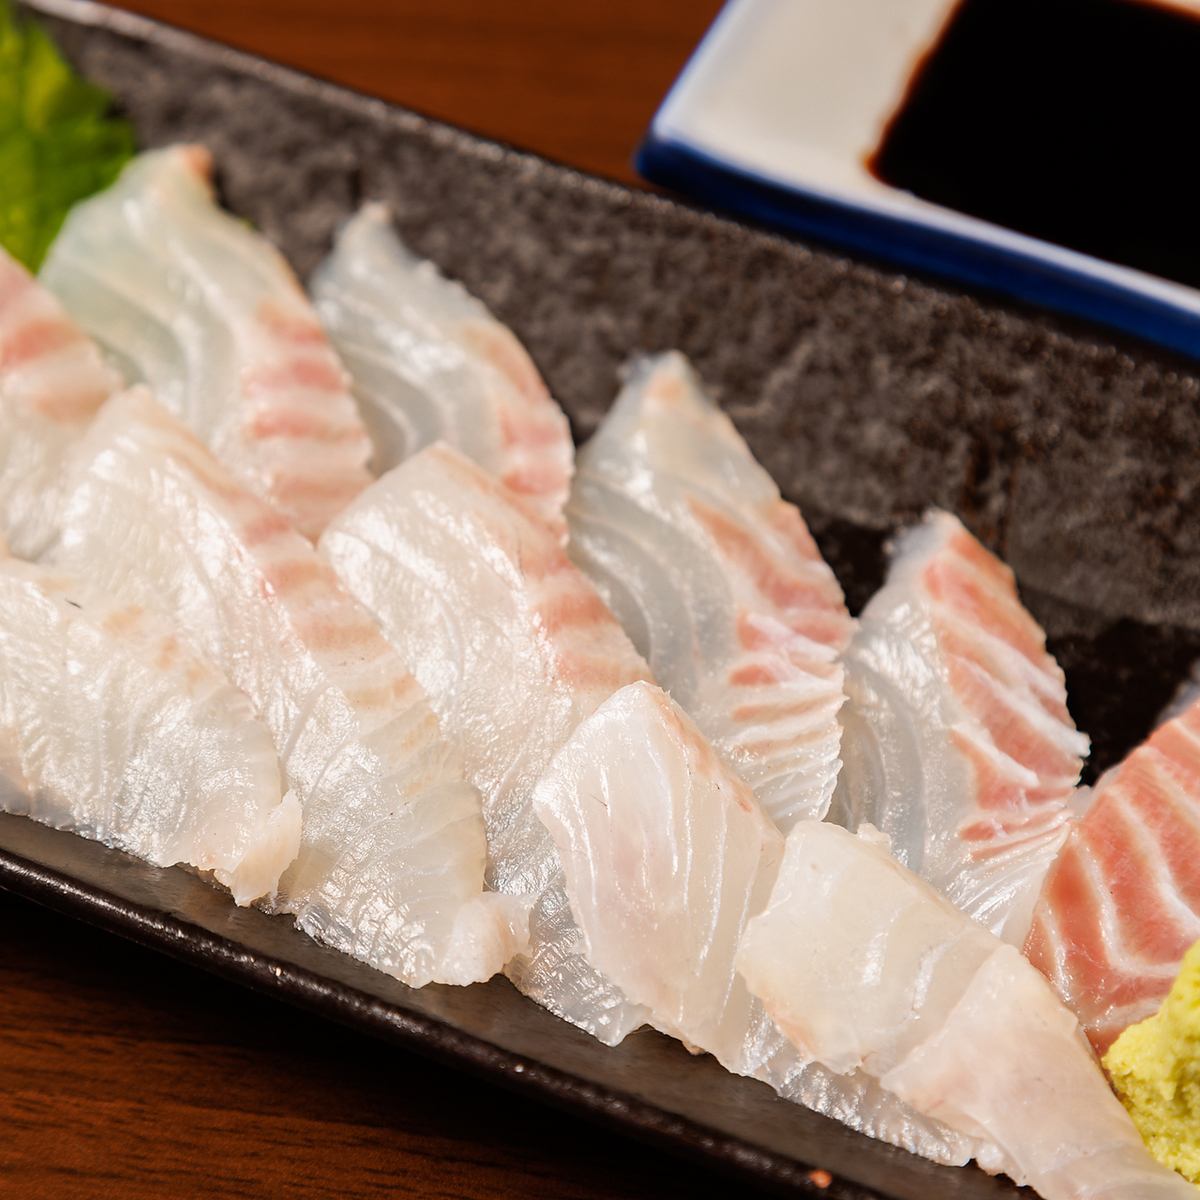 We offer fresh local free-range chicken and fish caught in Kyushu!